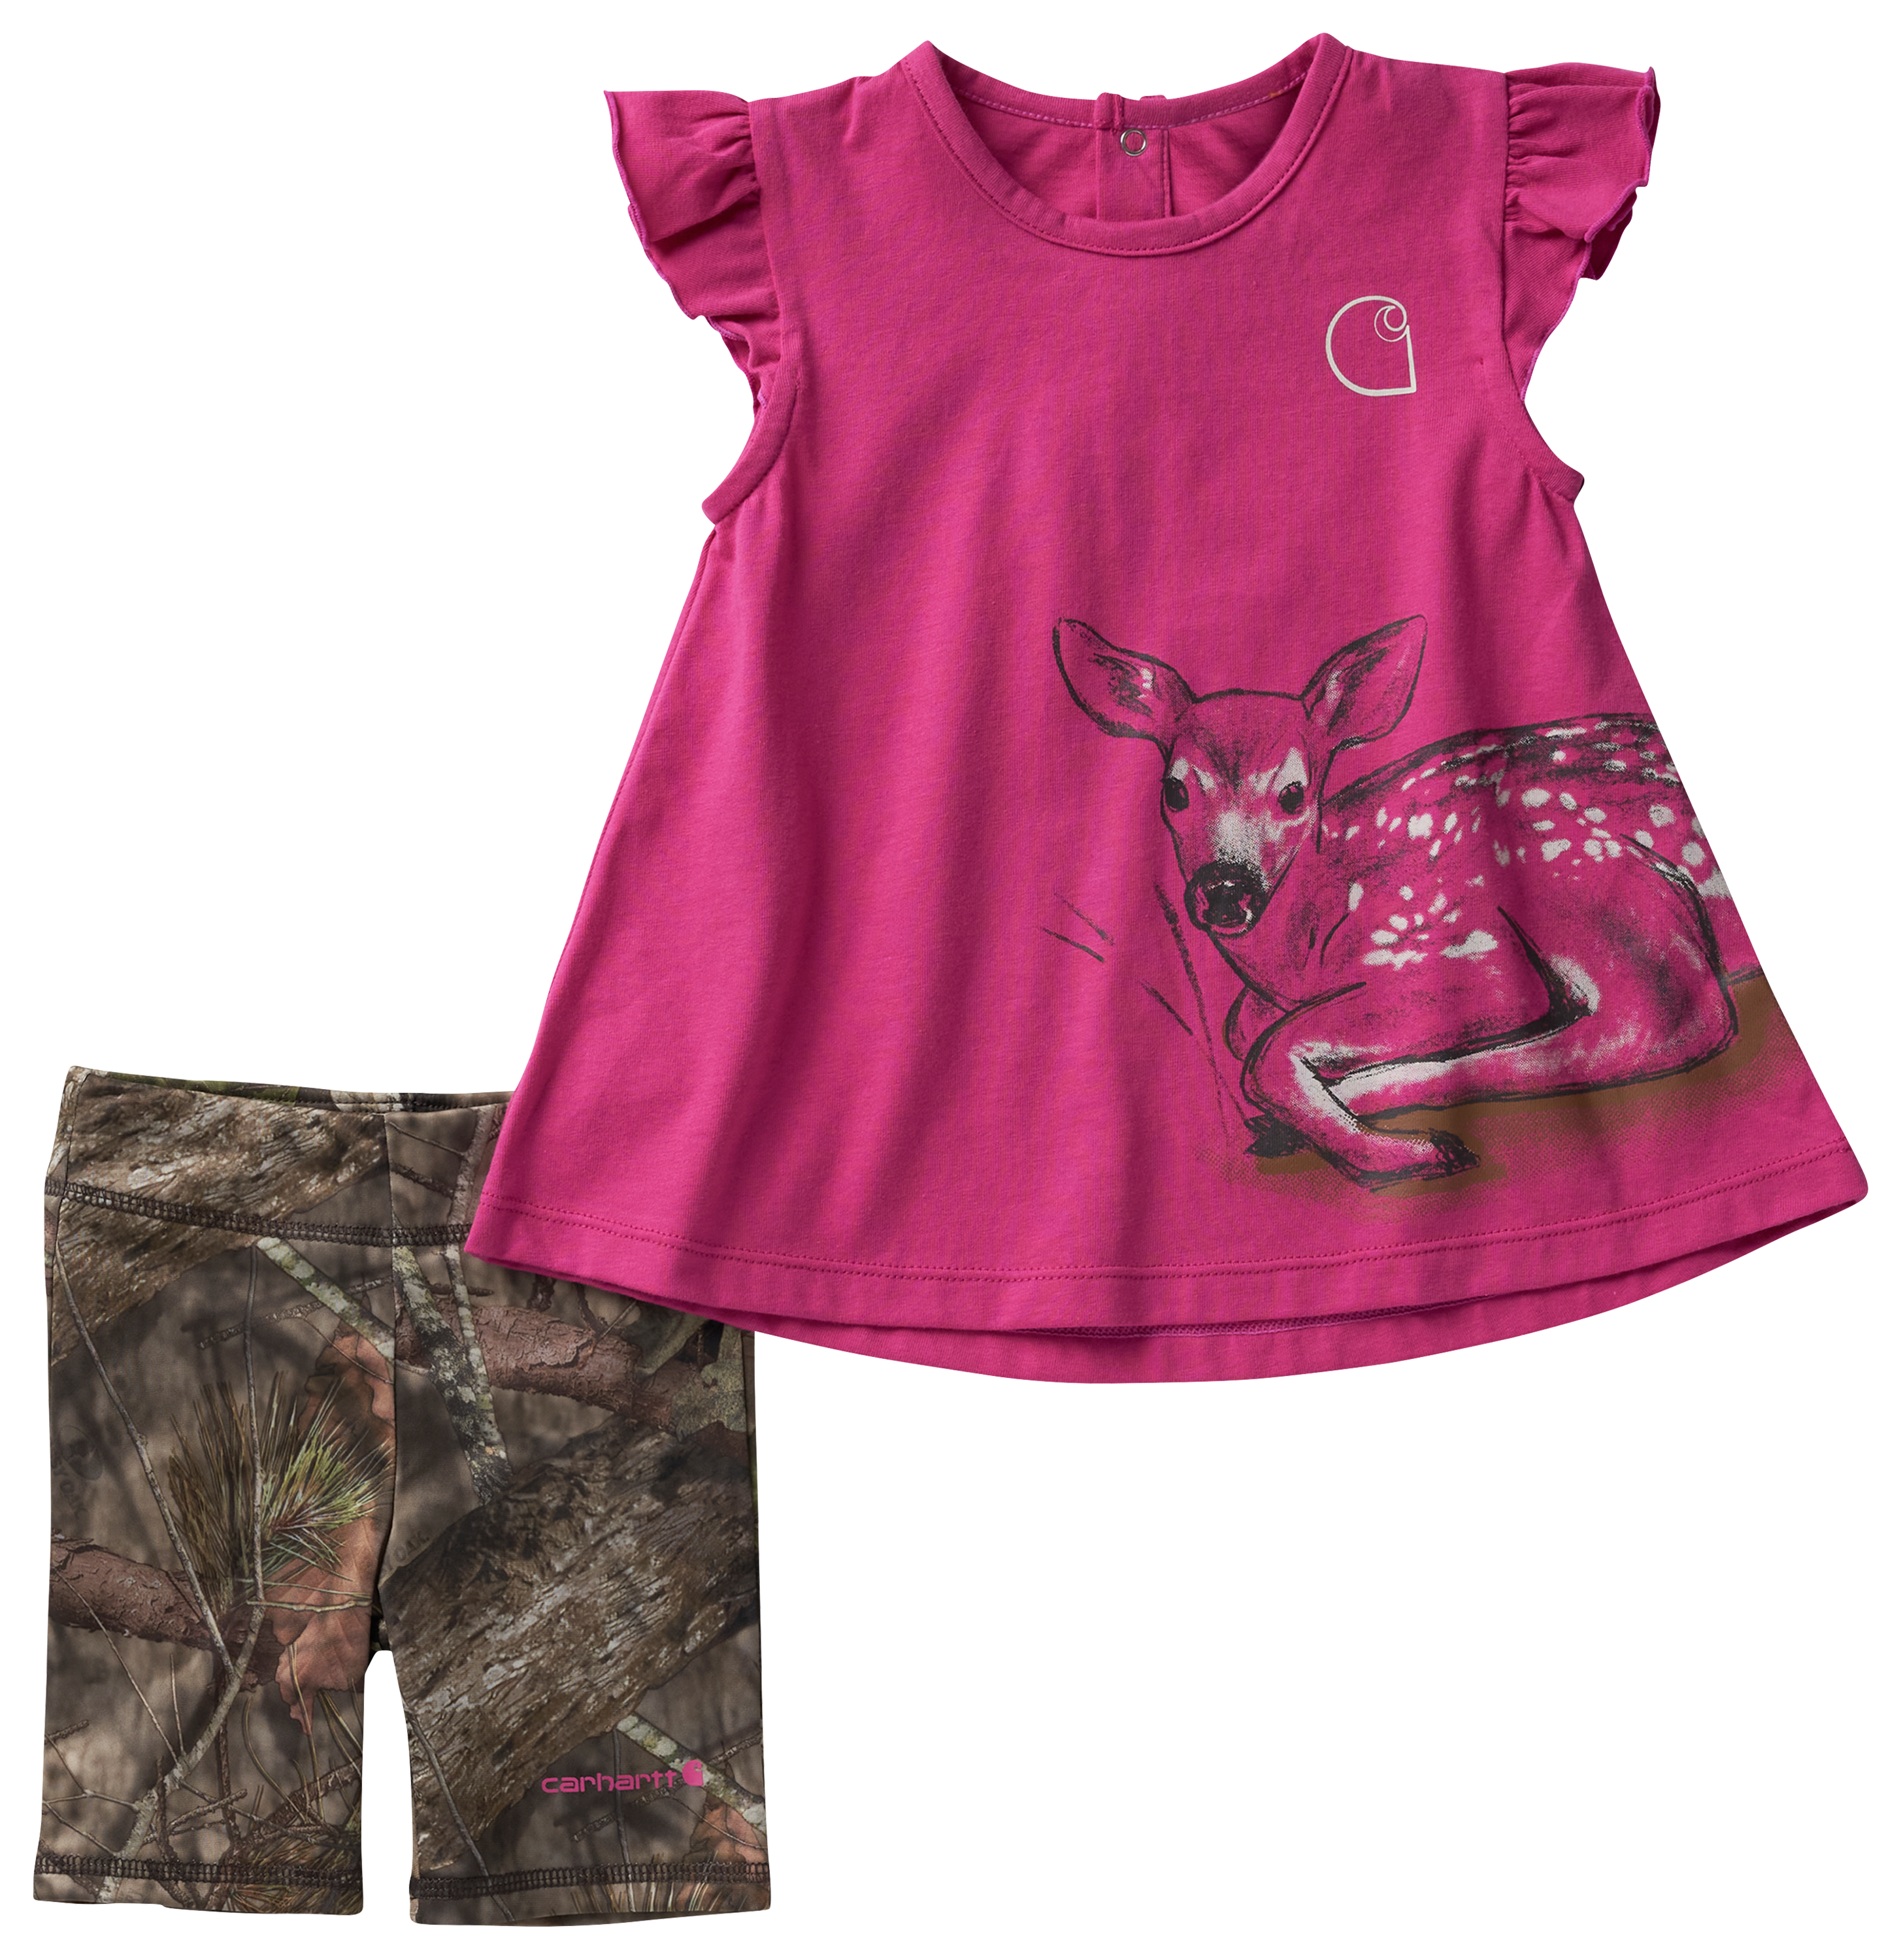 Carhartt Deer Short Sleeve Shirt and Camo Print Legging Shorts Set for Toddler Girls 3T